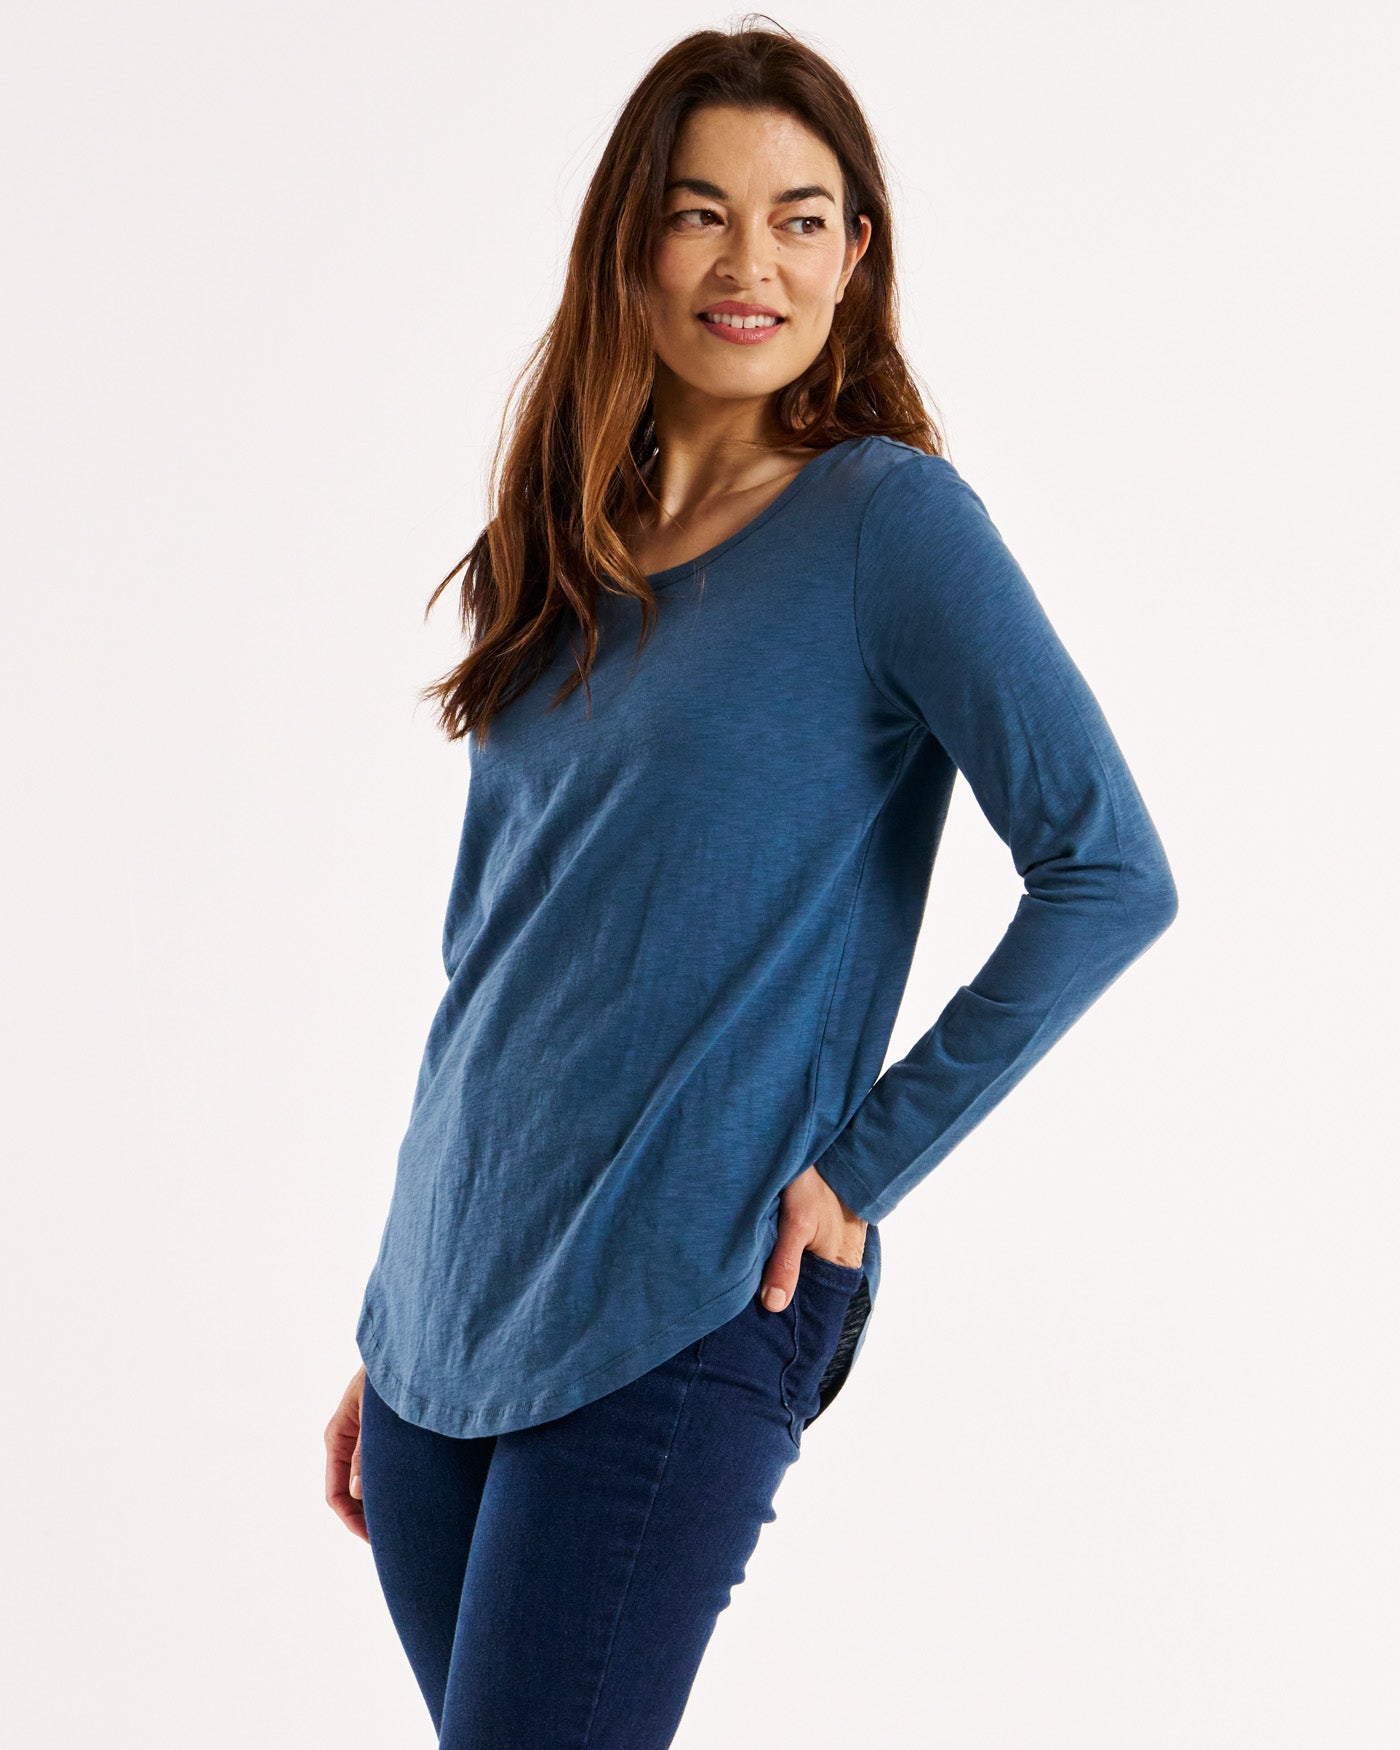 Megan Long Sleeve Cotton Basic Top - Steel Blue